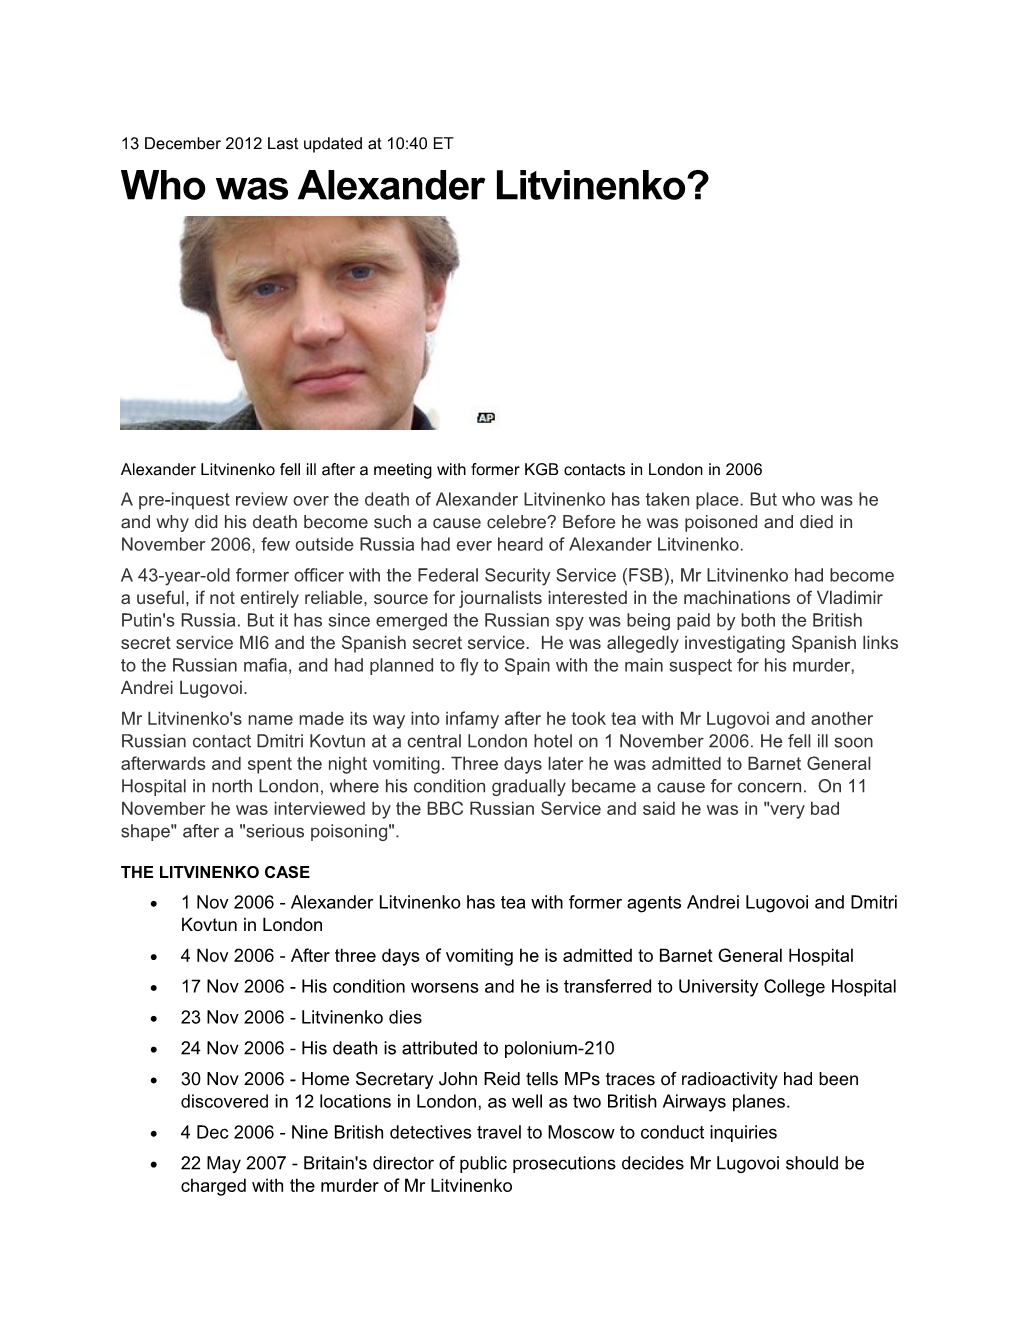 Who Was Alexander Litvinenko?